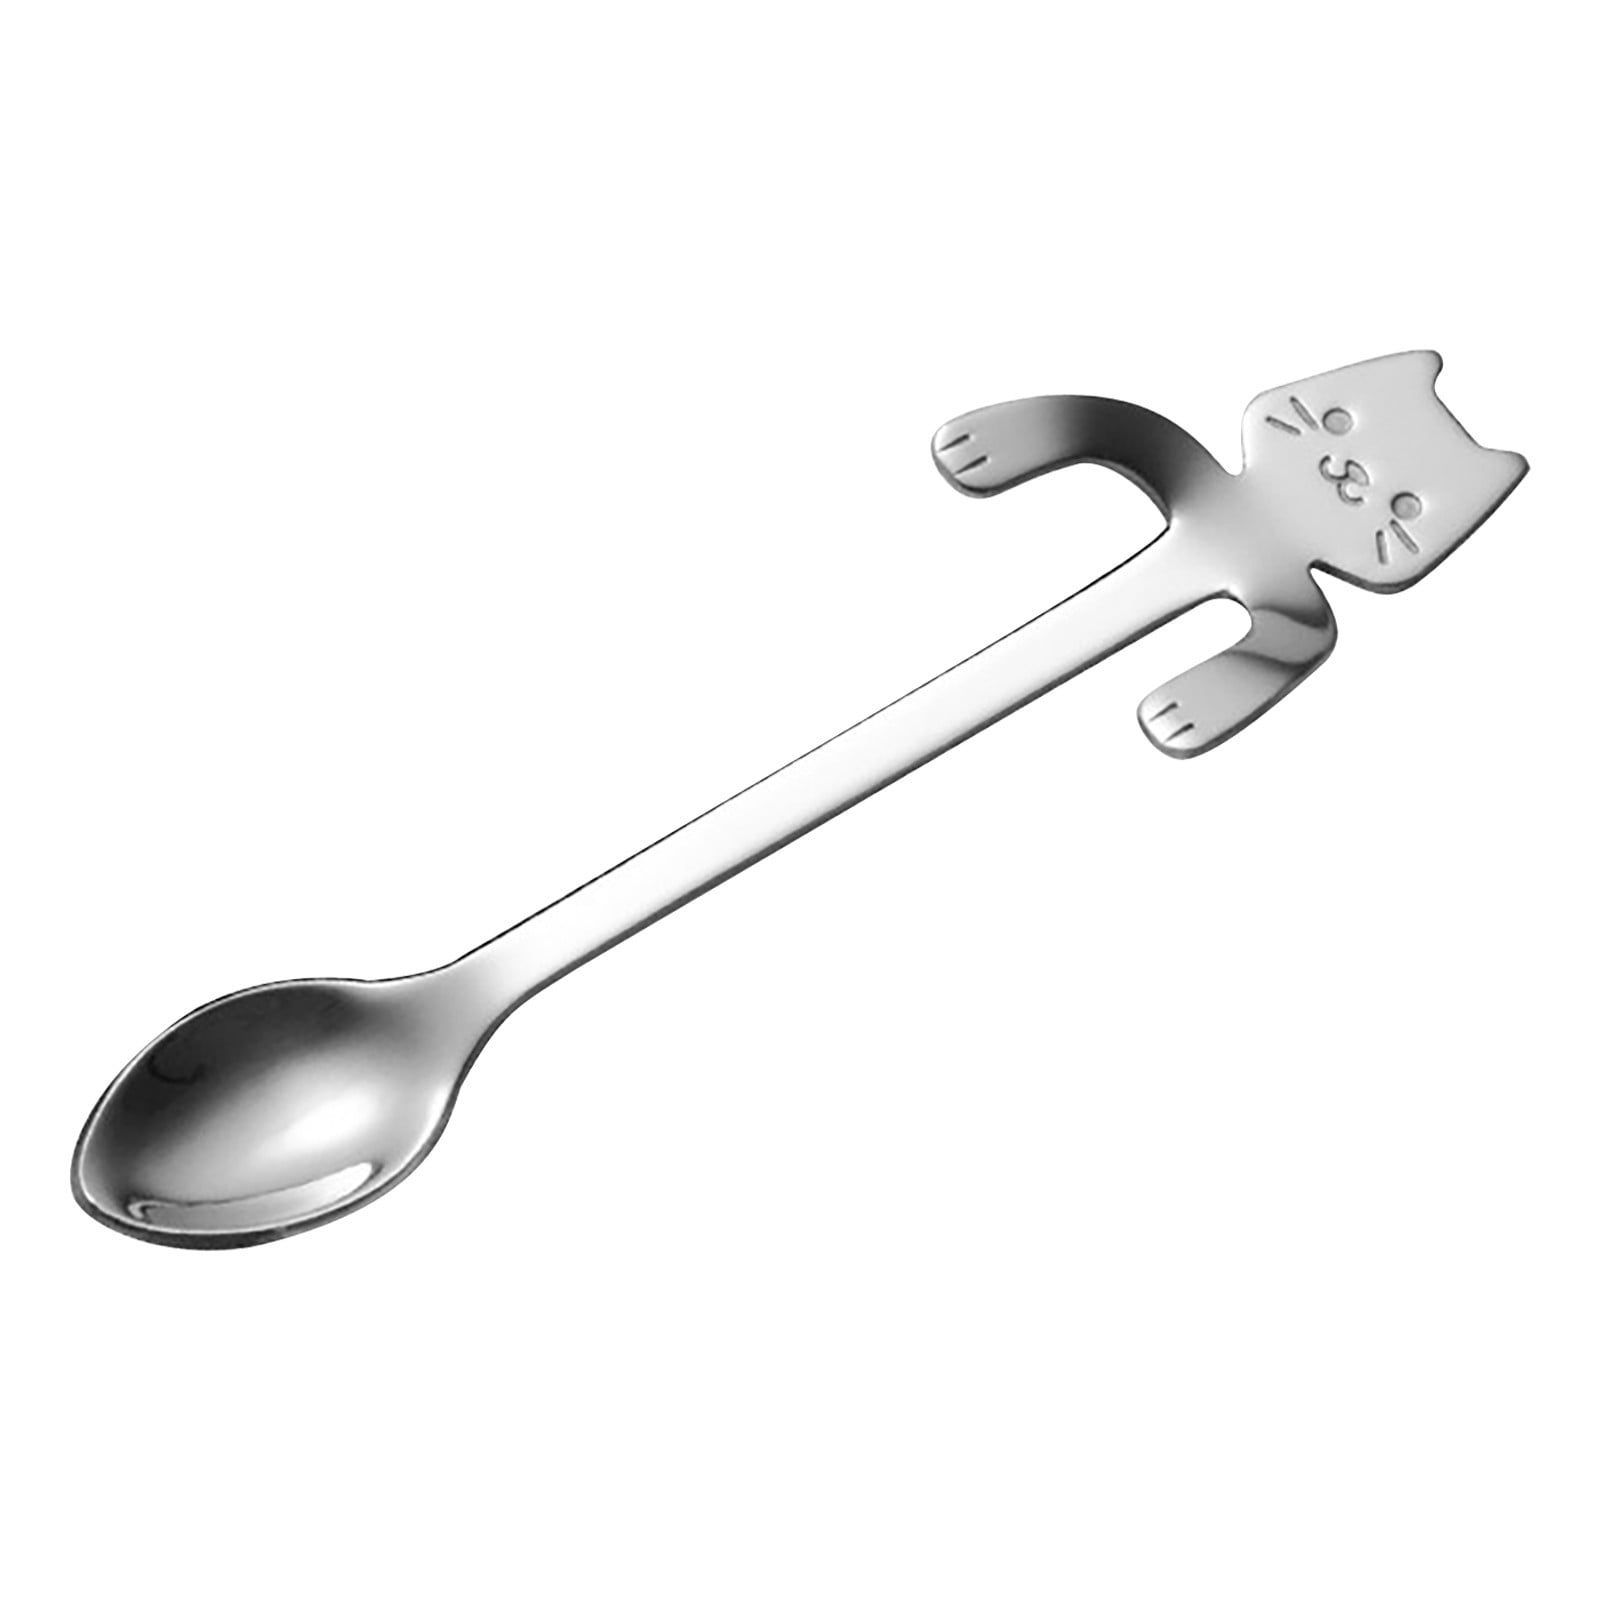 Black, 1 Small Mini Stainless Steel Cartoon Cat Coffee Spoon Stirring Spoon Tea Spoon